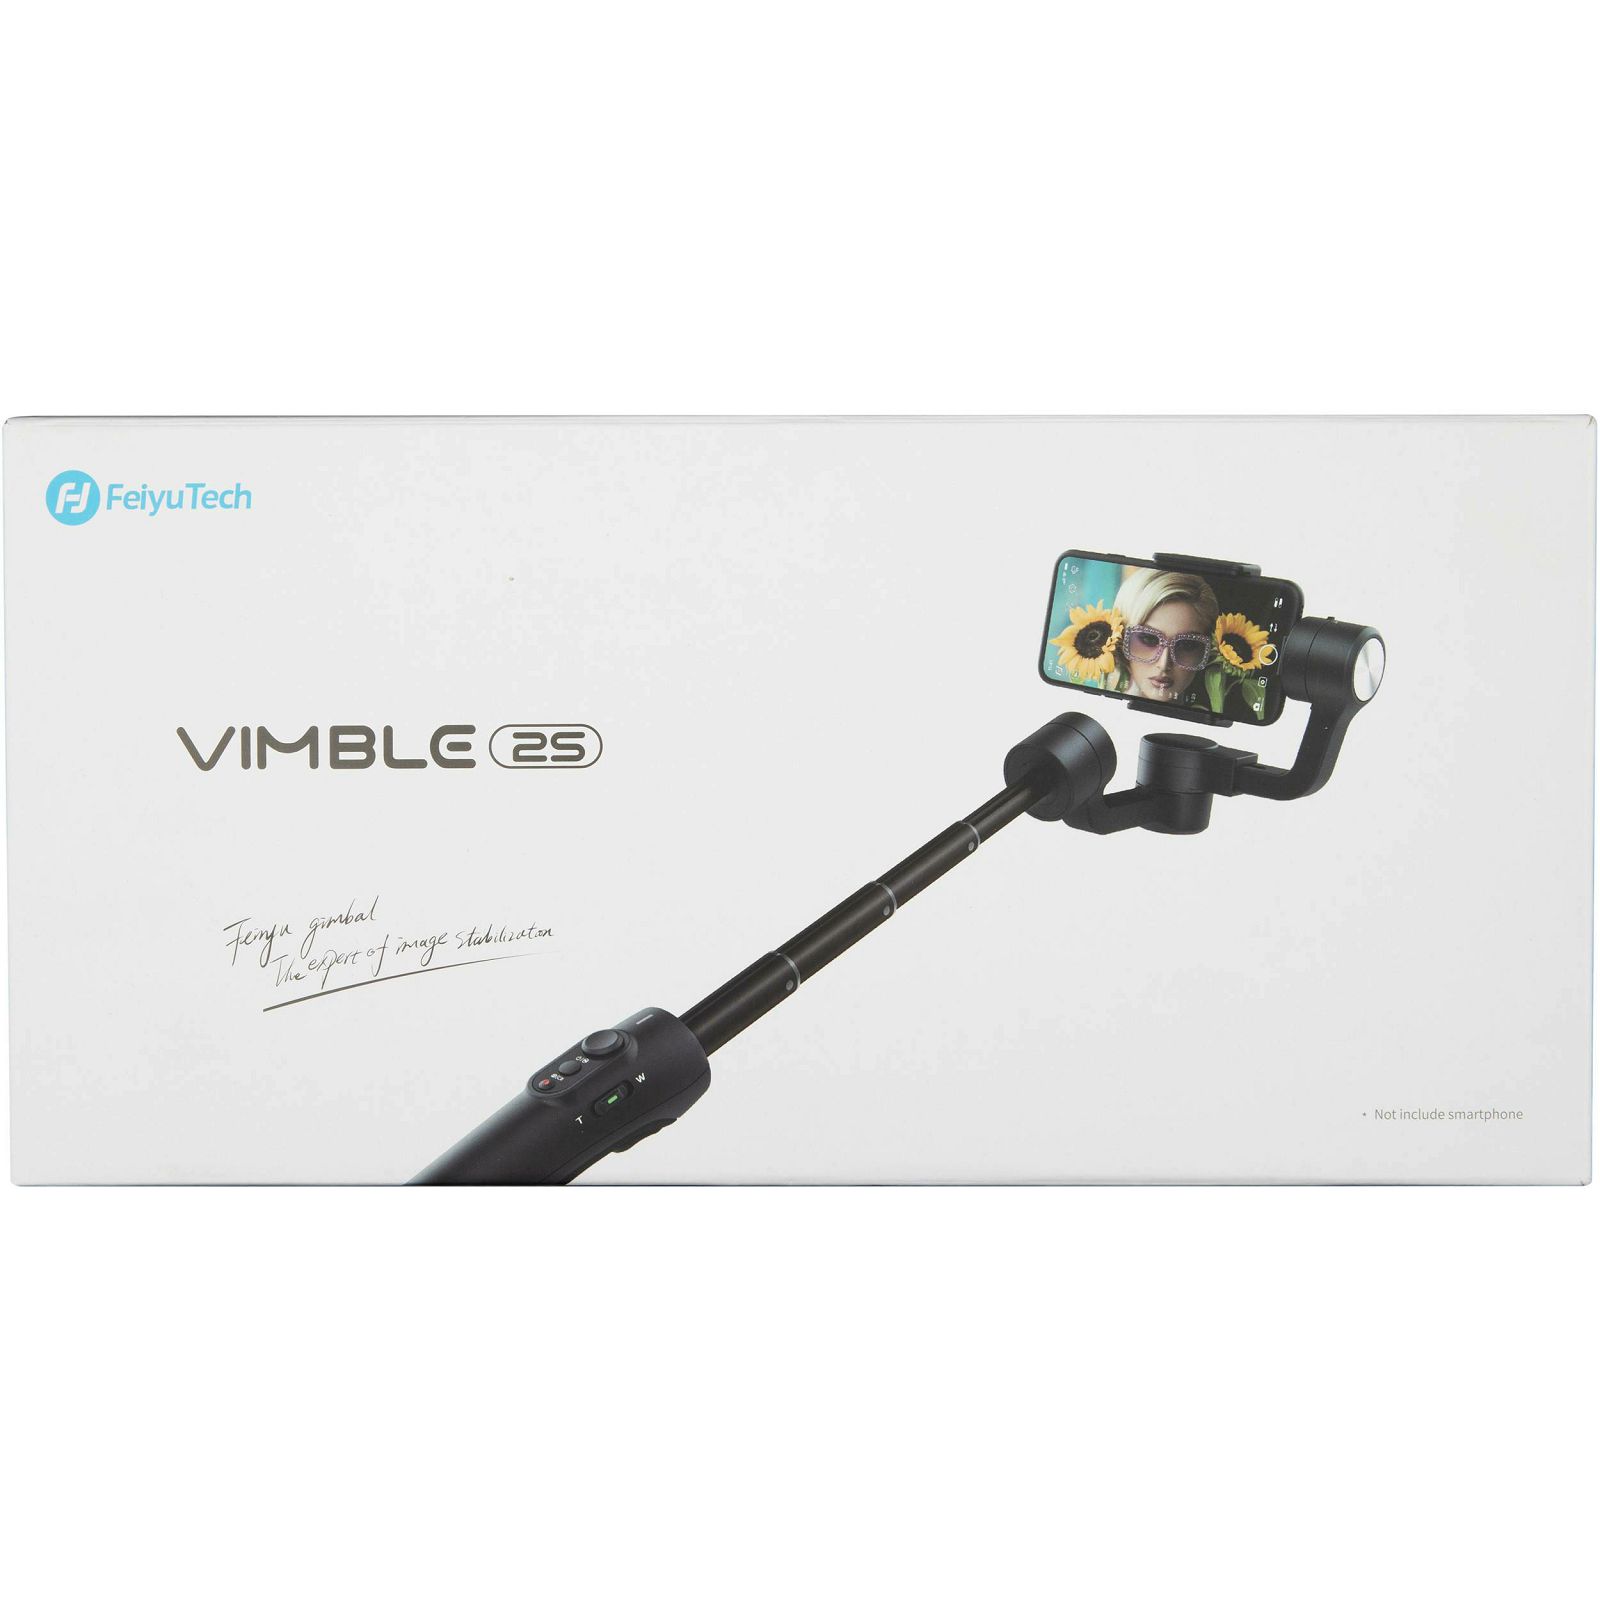 FeiyuTech Vimble 2S Gimbal Stabilizer 3-osni stabilizator za mobitele Smartphone